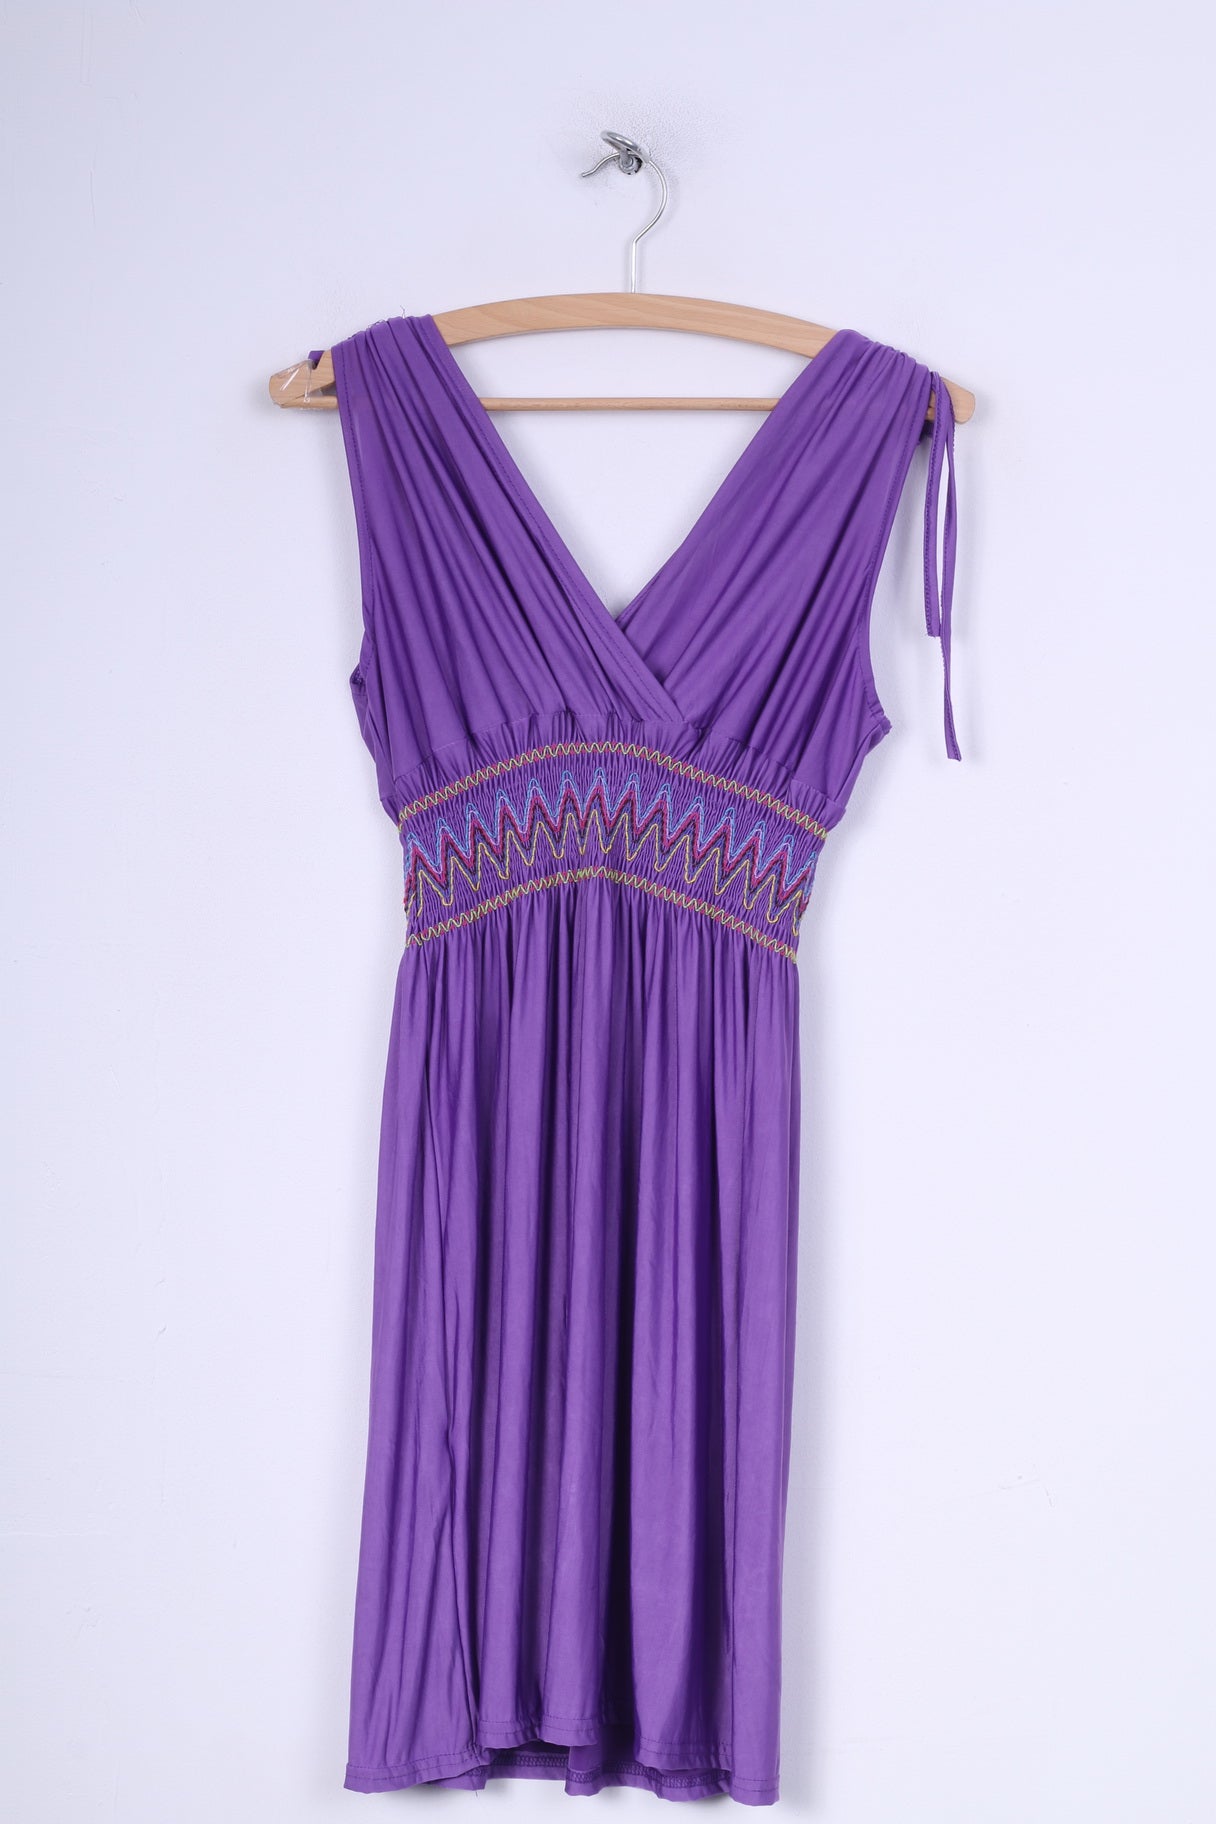 Womens S Long Top Blouse Tunic Purple Summer Beach Dress Sleeveless